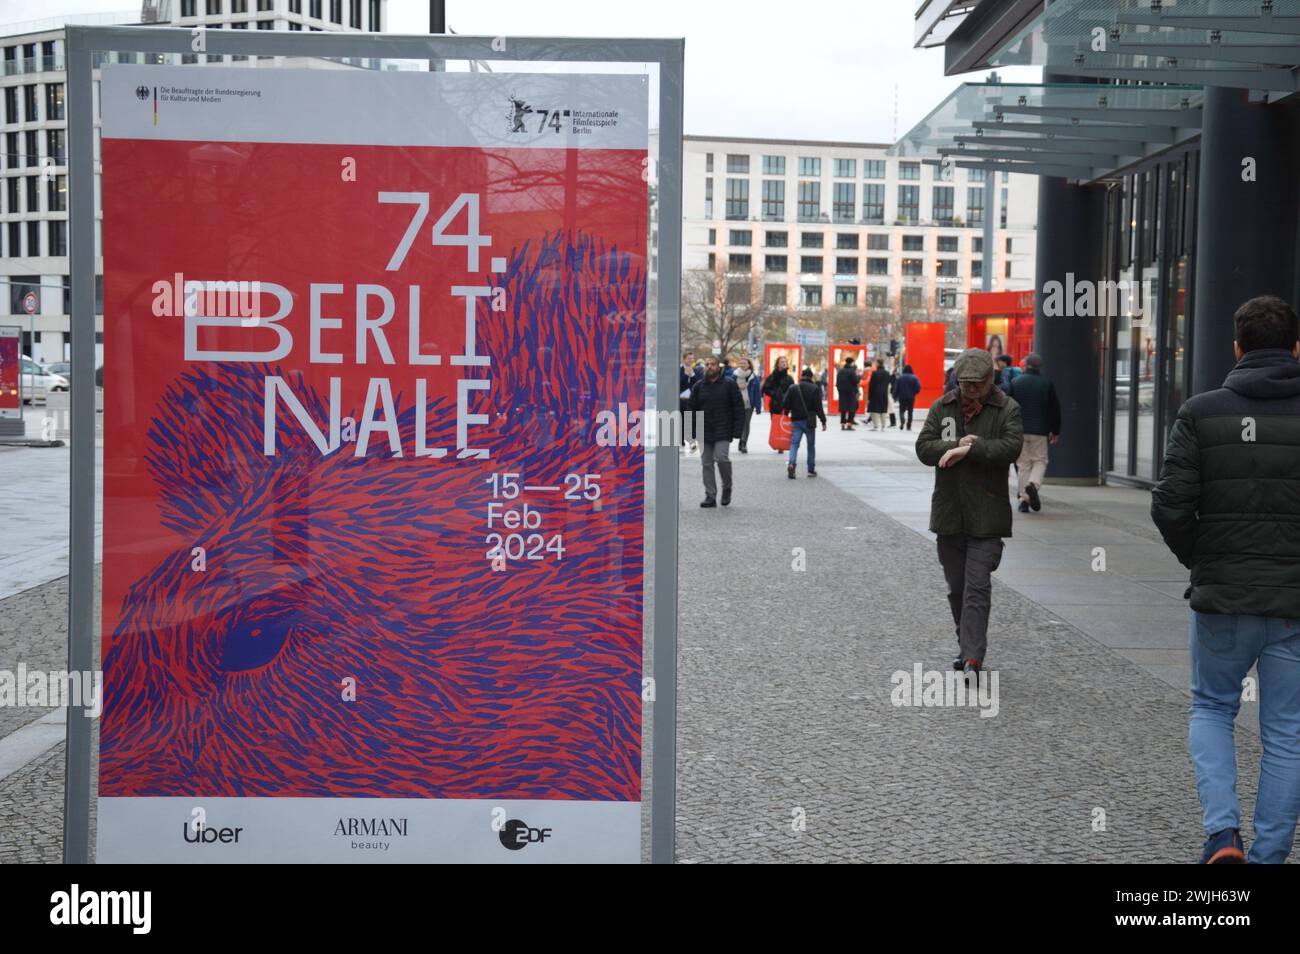 Berlin, Deutschland - 15. Februar 2024 - die Berlinale 2024, das Internationale Filmfestival, startet. (Foto: Markku Rainer Peltonen) Stockfoto